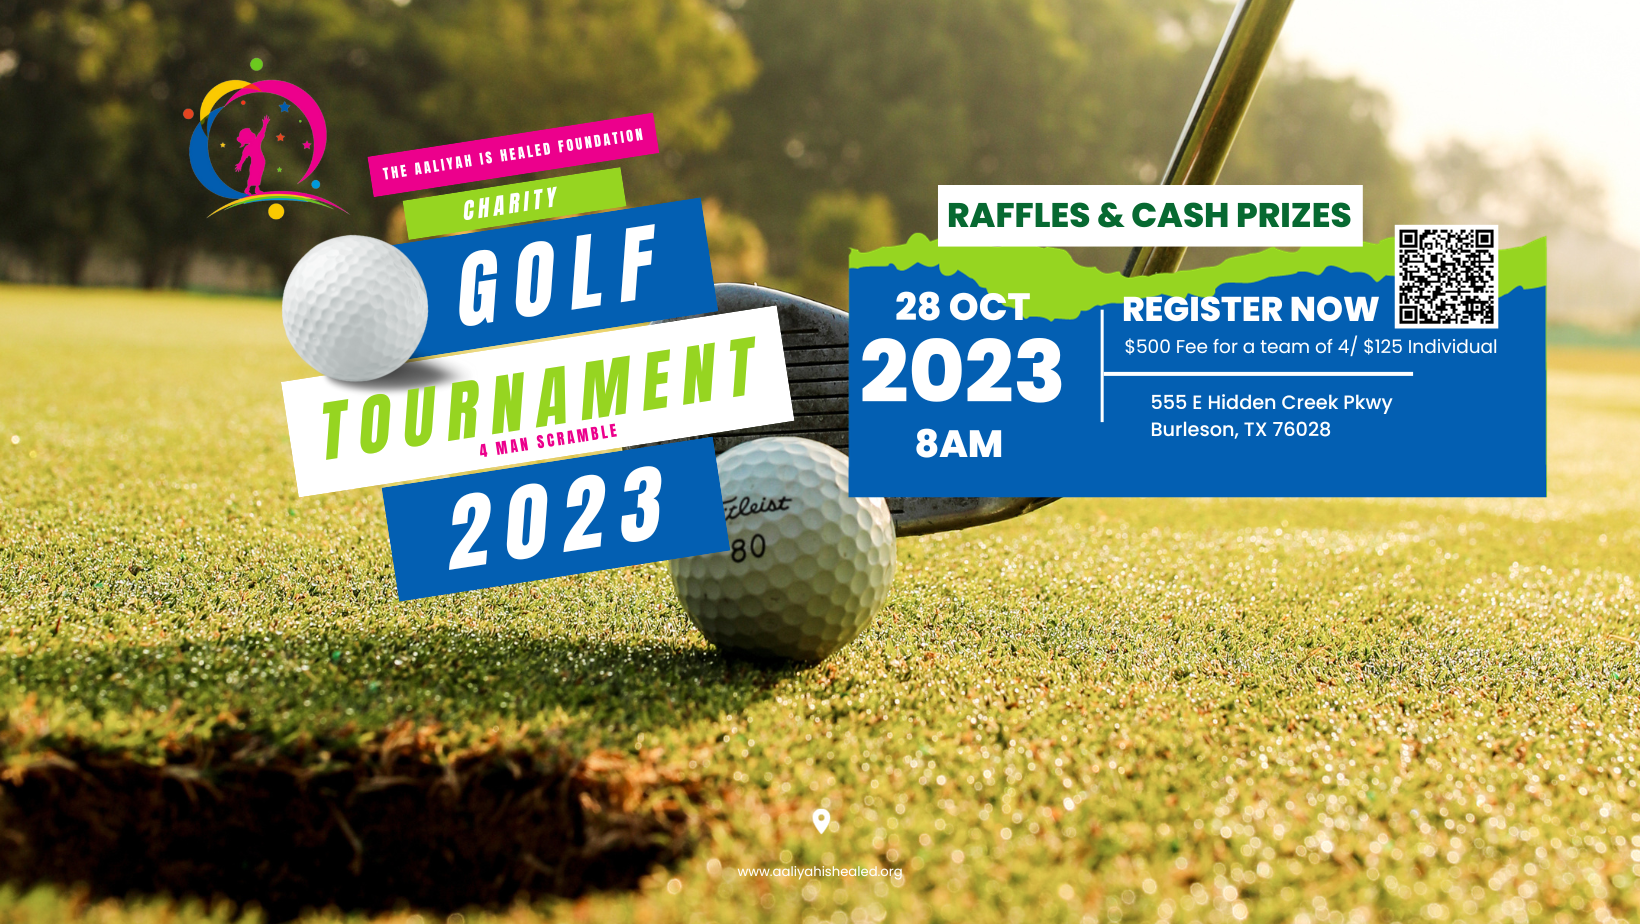 AIH Charity Golf Tournament 2023